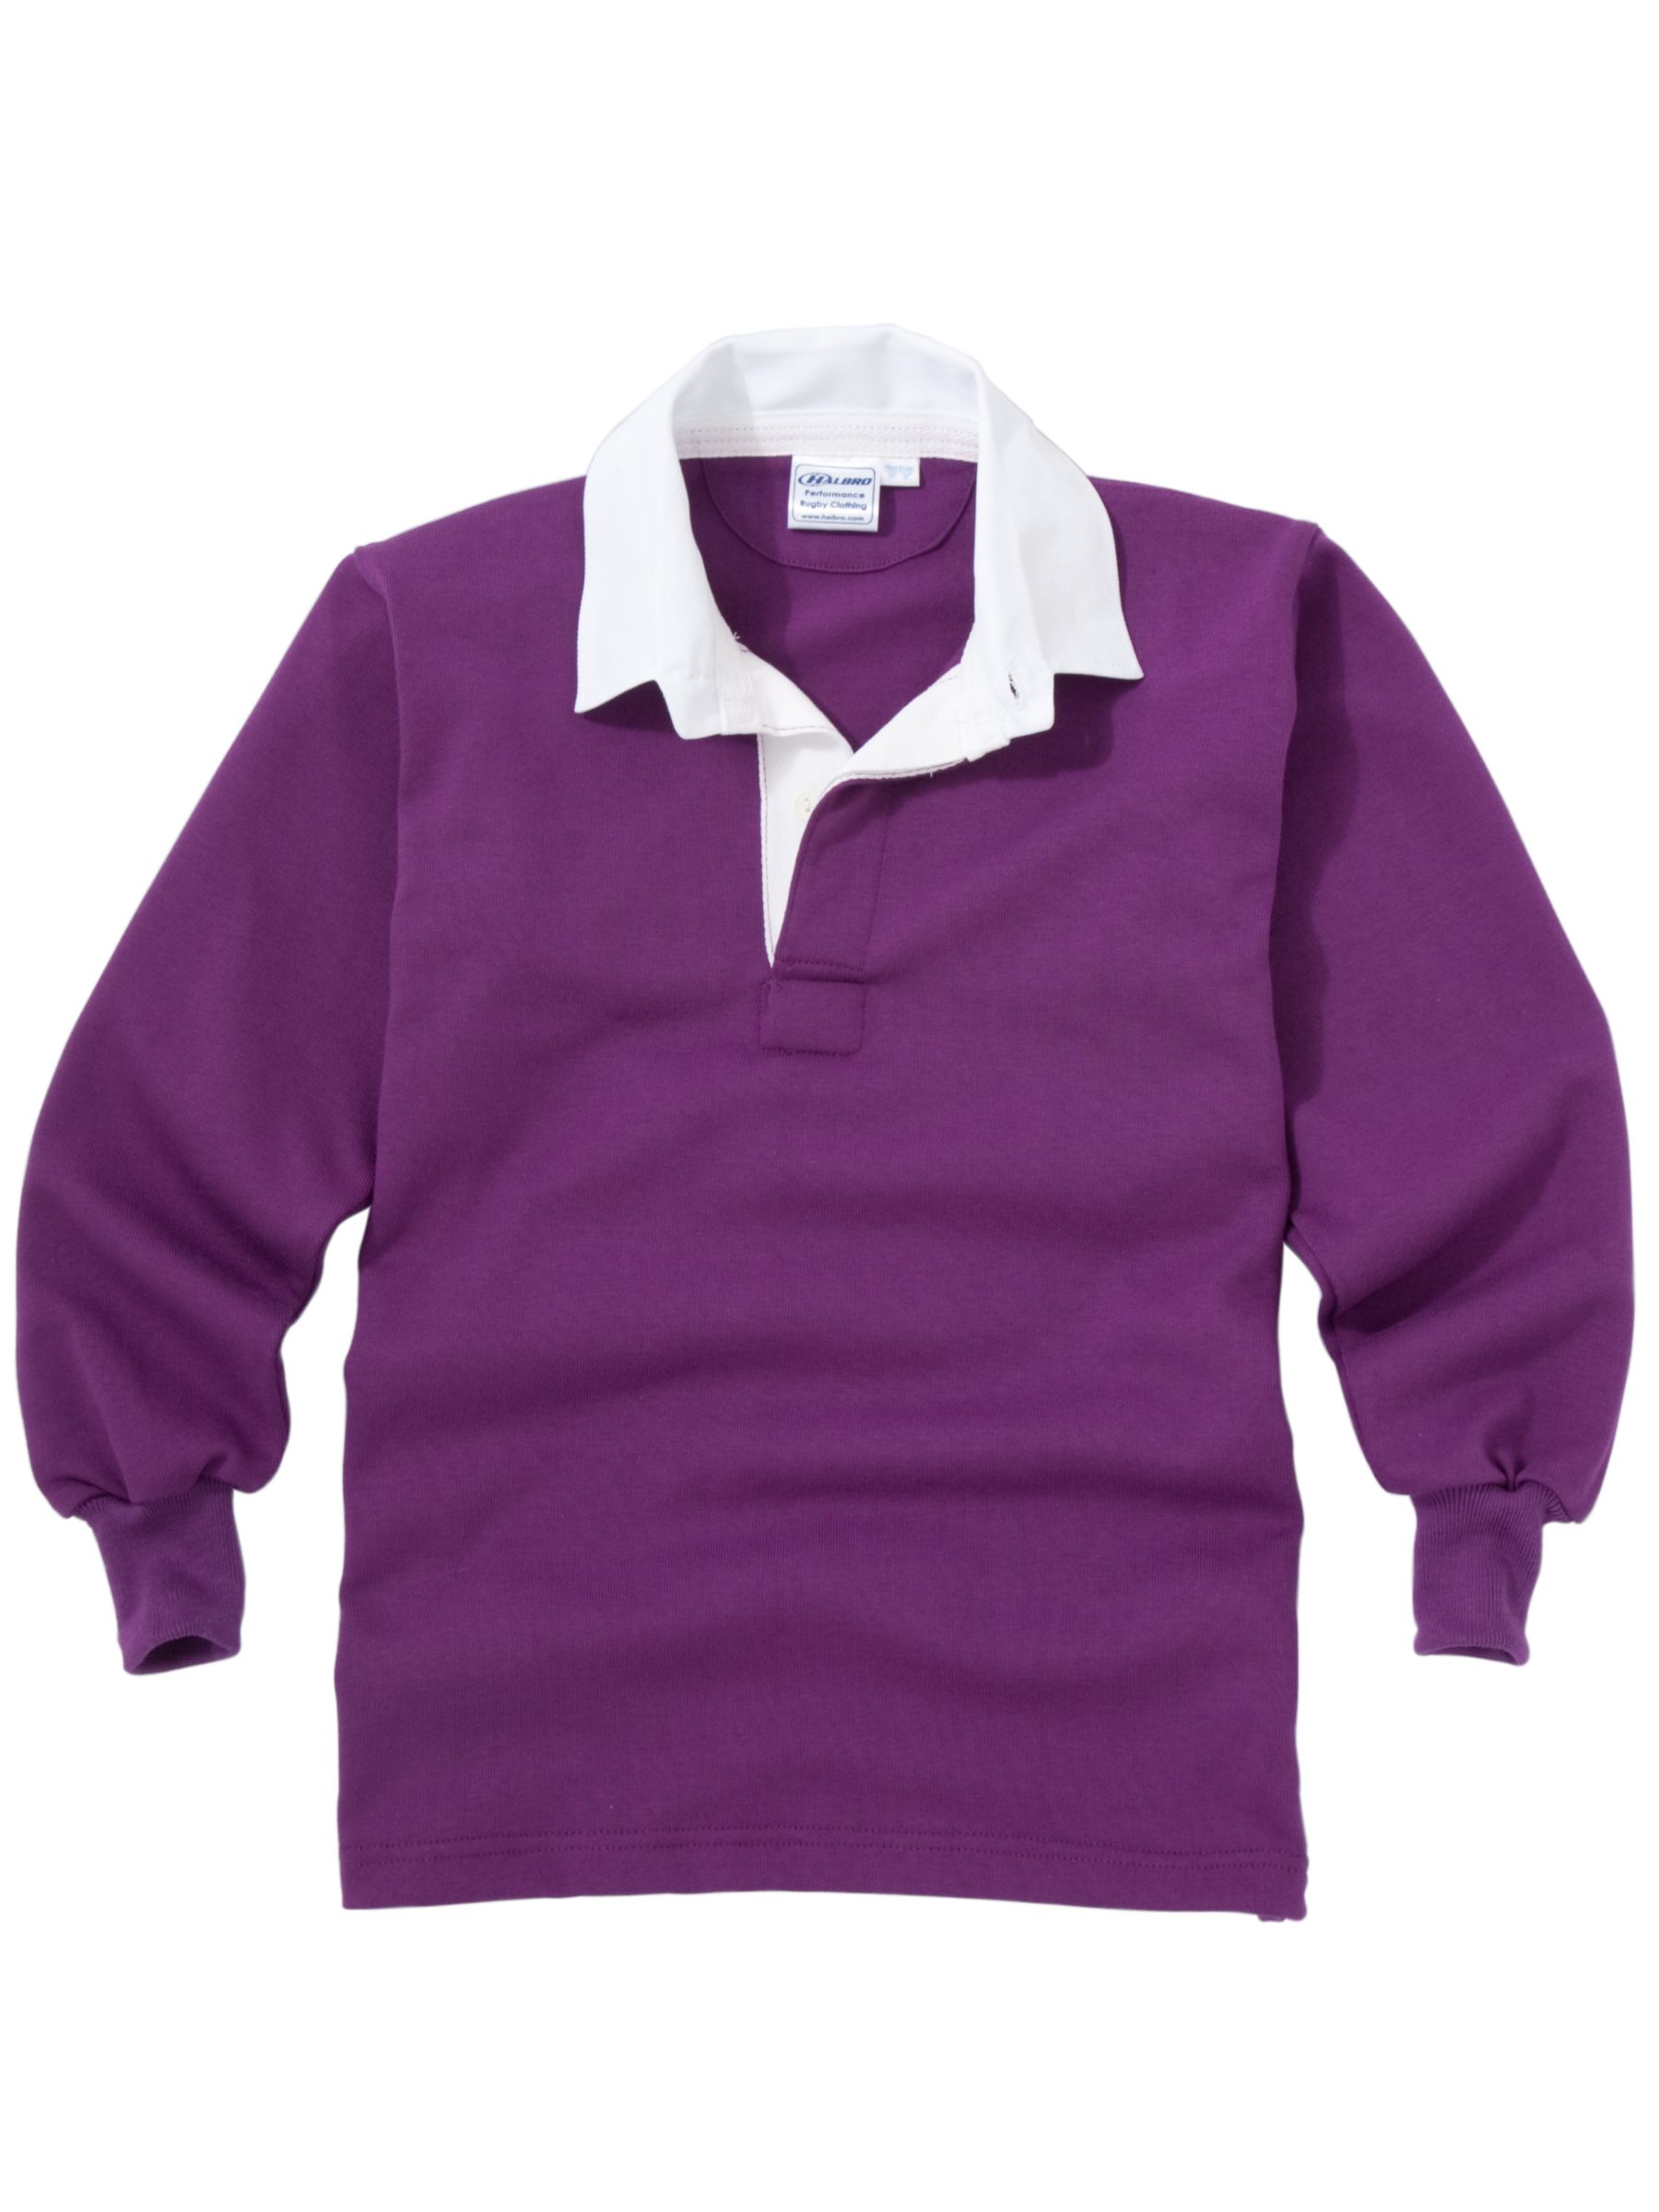 John Lewis School Cotton Rugby Shirt, Purple